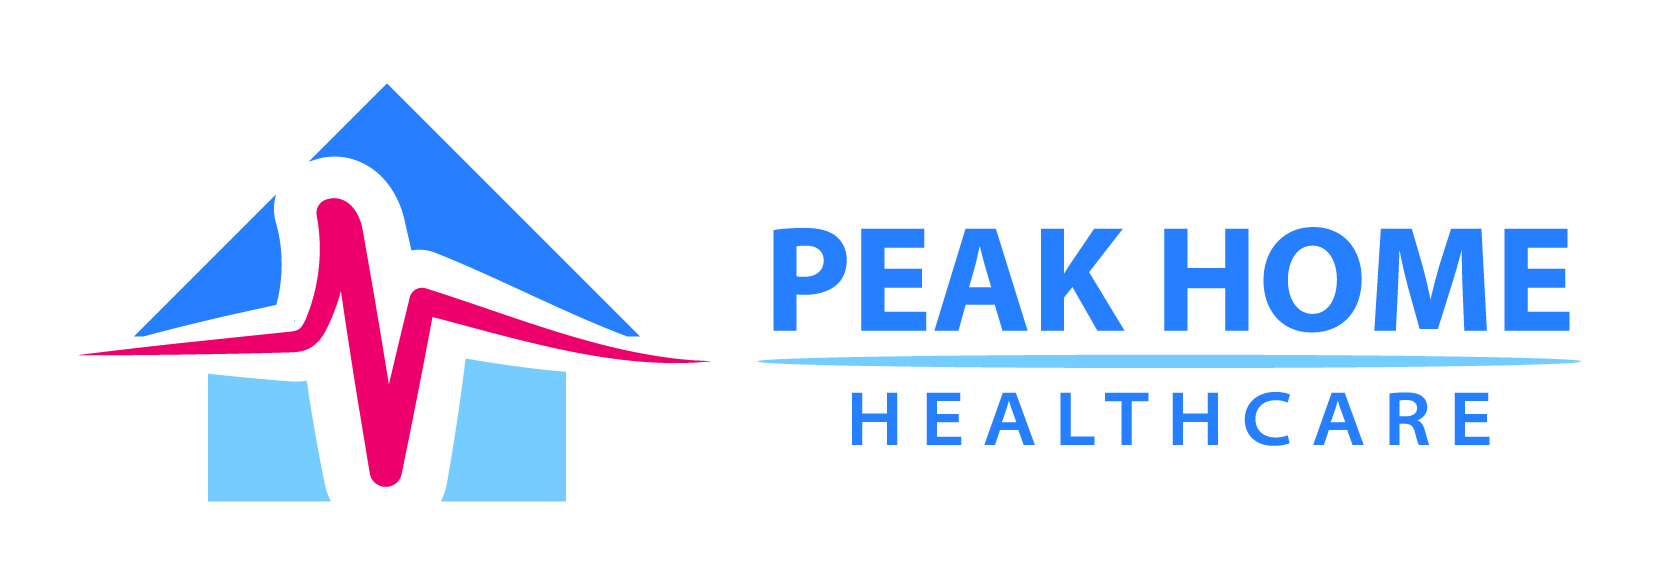 peak home health care logo